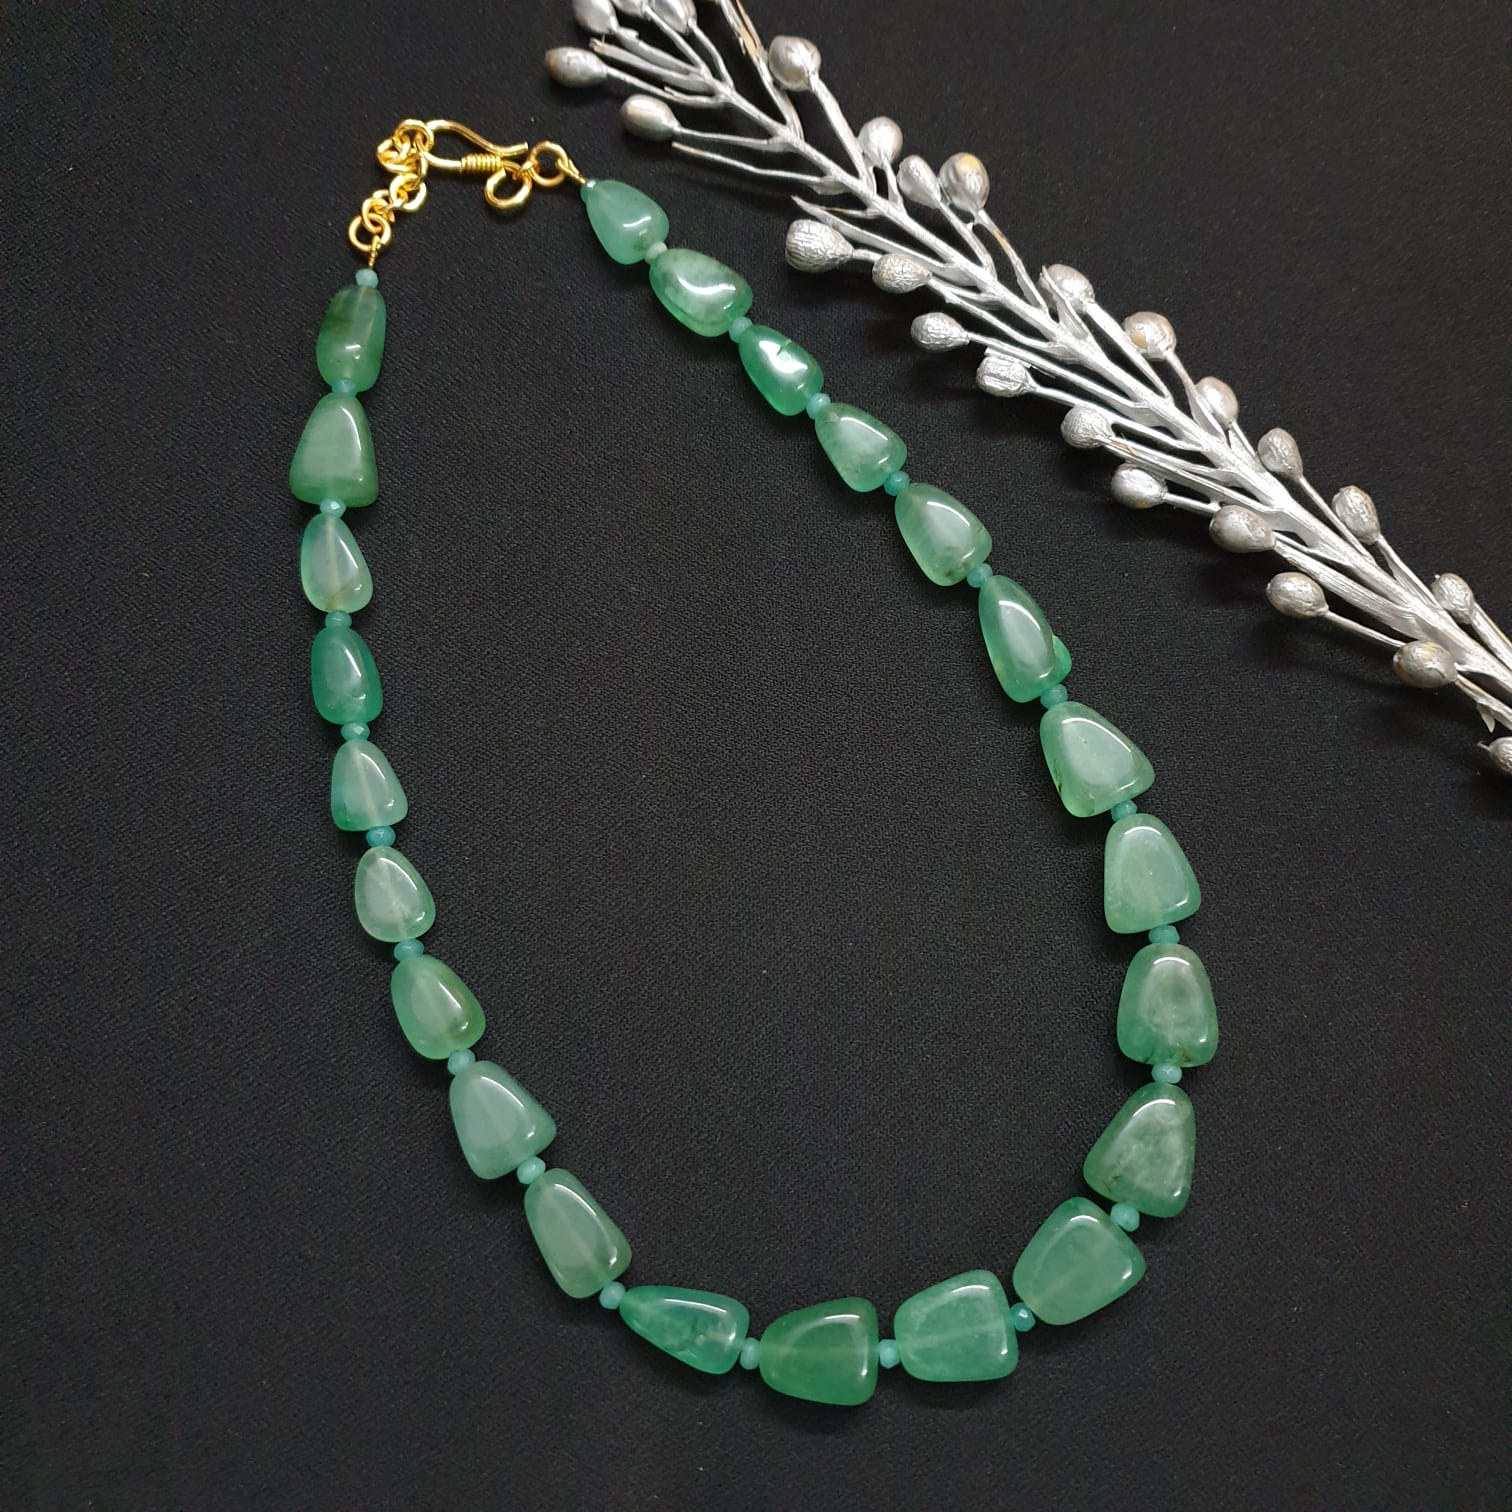 New Torrid Multilayered Beaded Necklaces Burgundy, Olive Green Gold Tone  Tassels | eBay